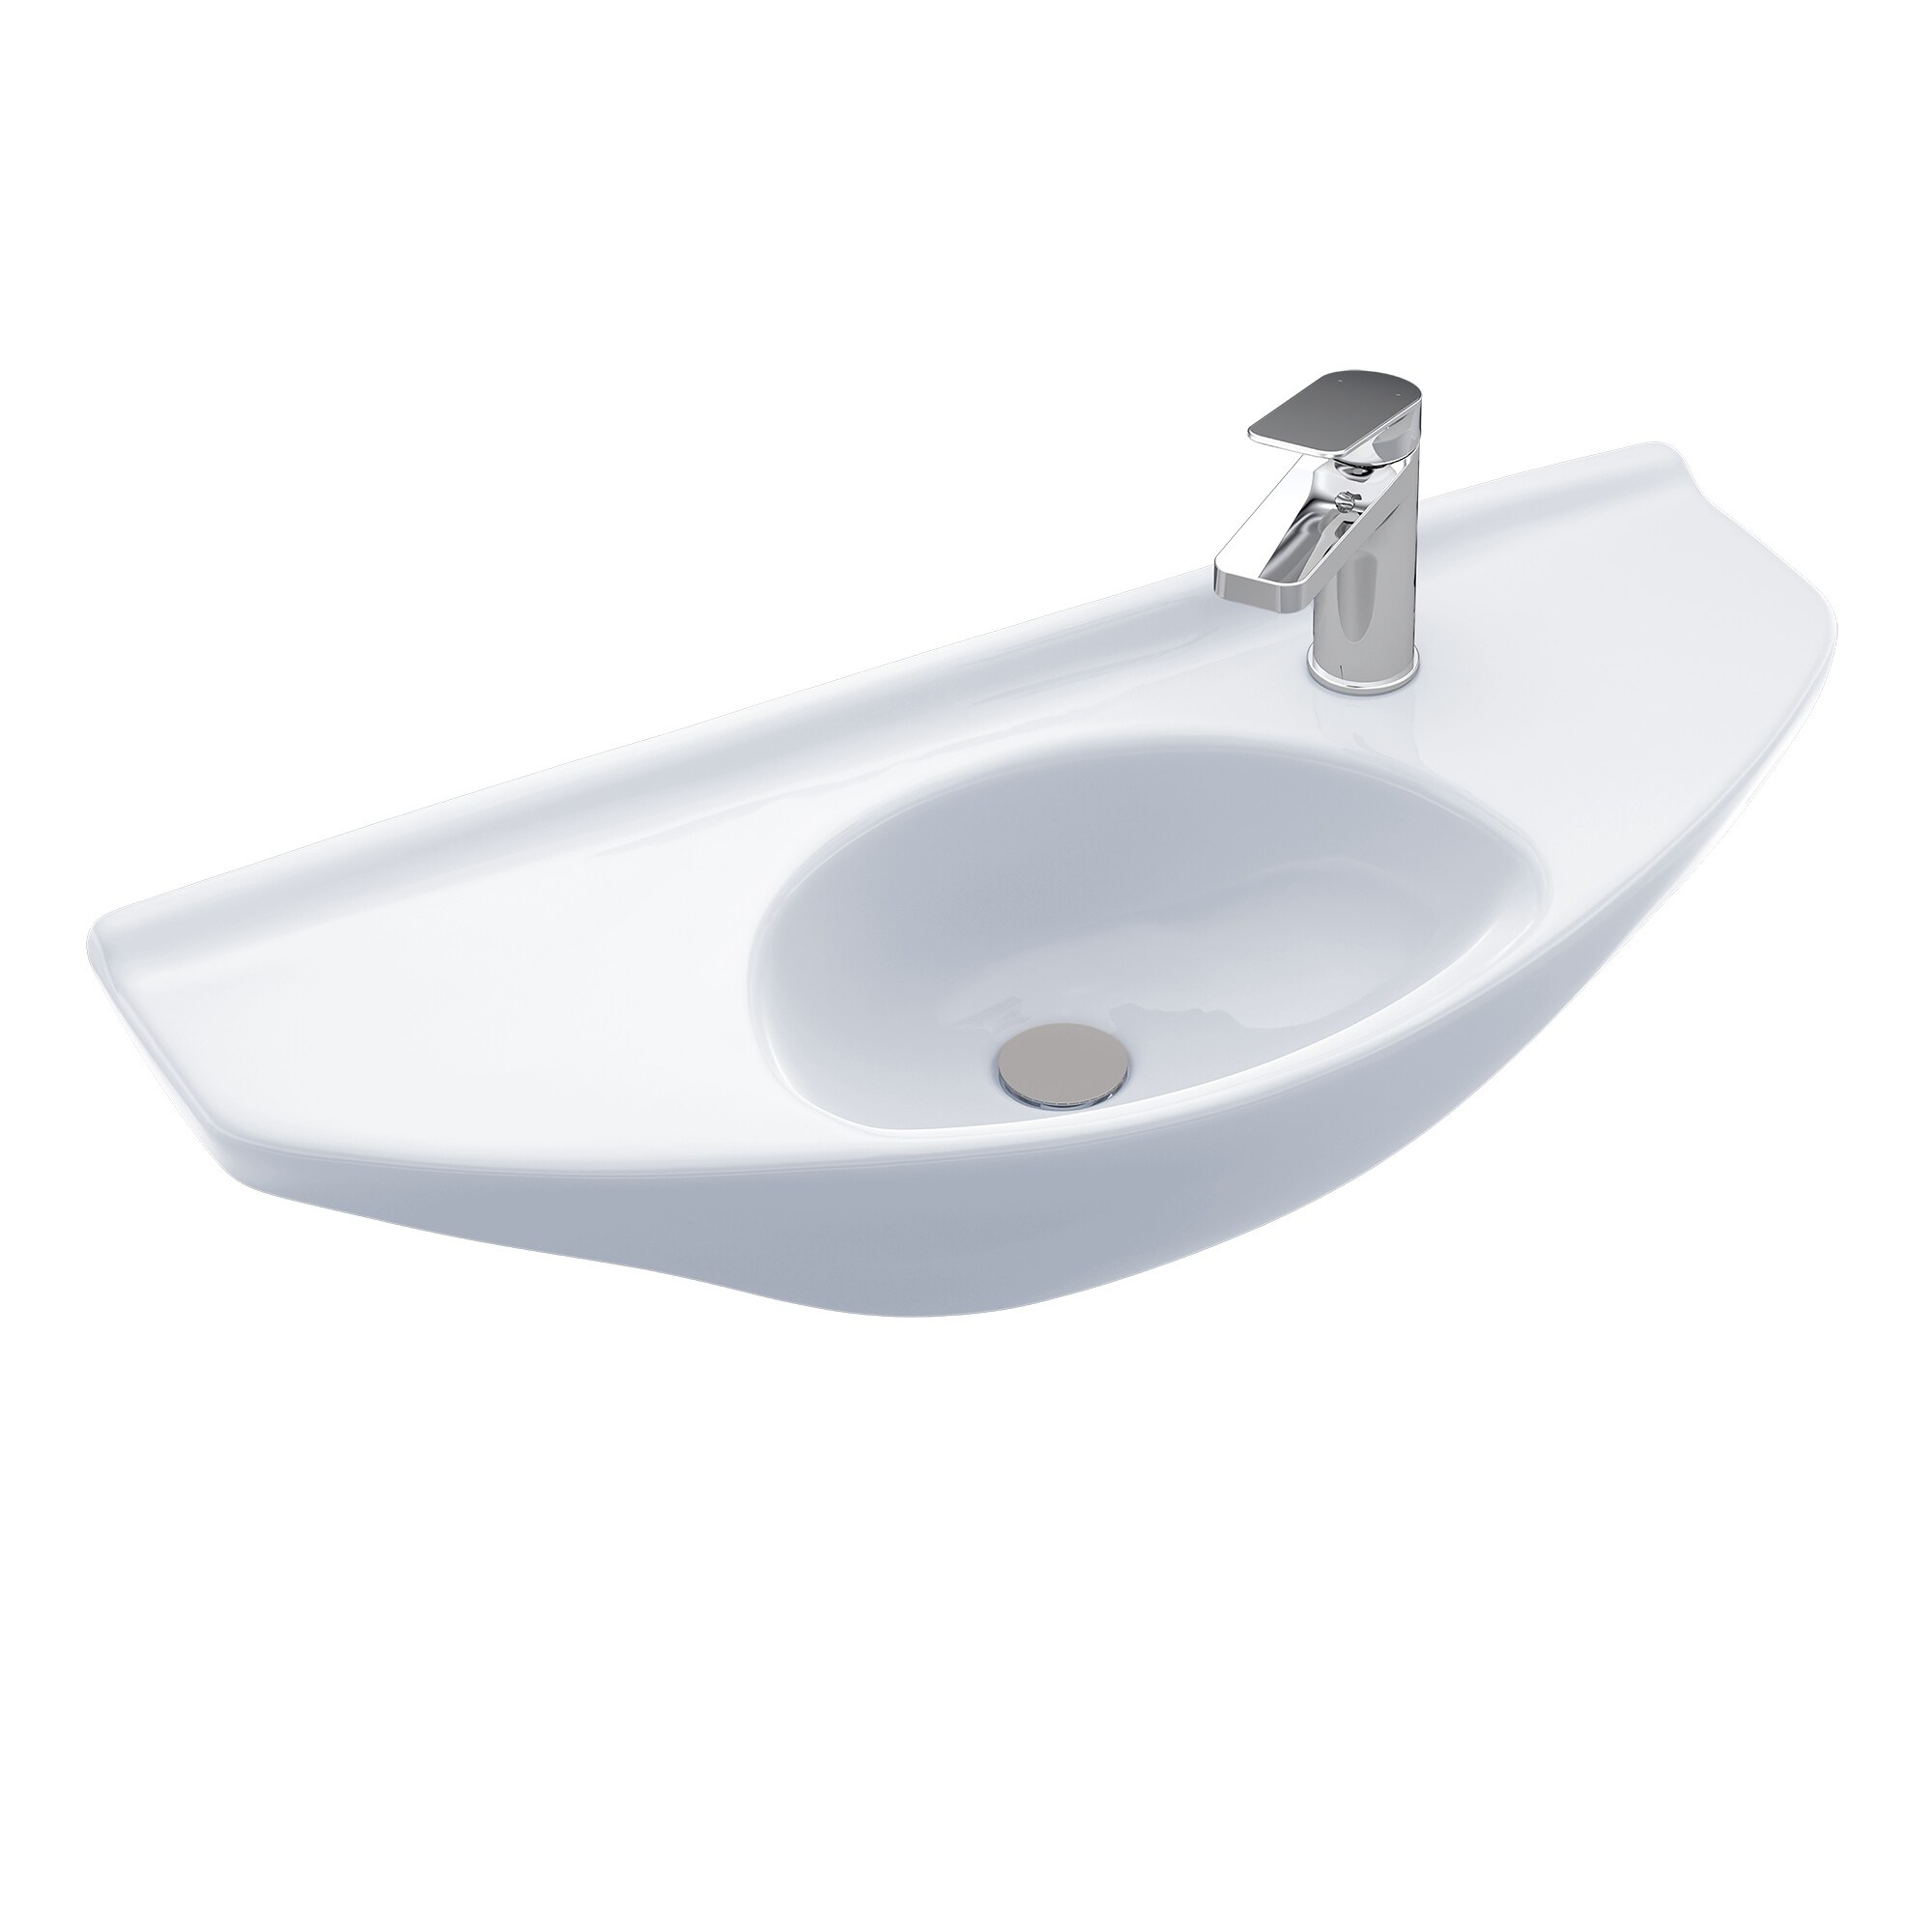 TOTO Supreme Wall Mount Porcelain Bathroom Sink Cotton White LT241G#01 for sale online 